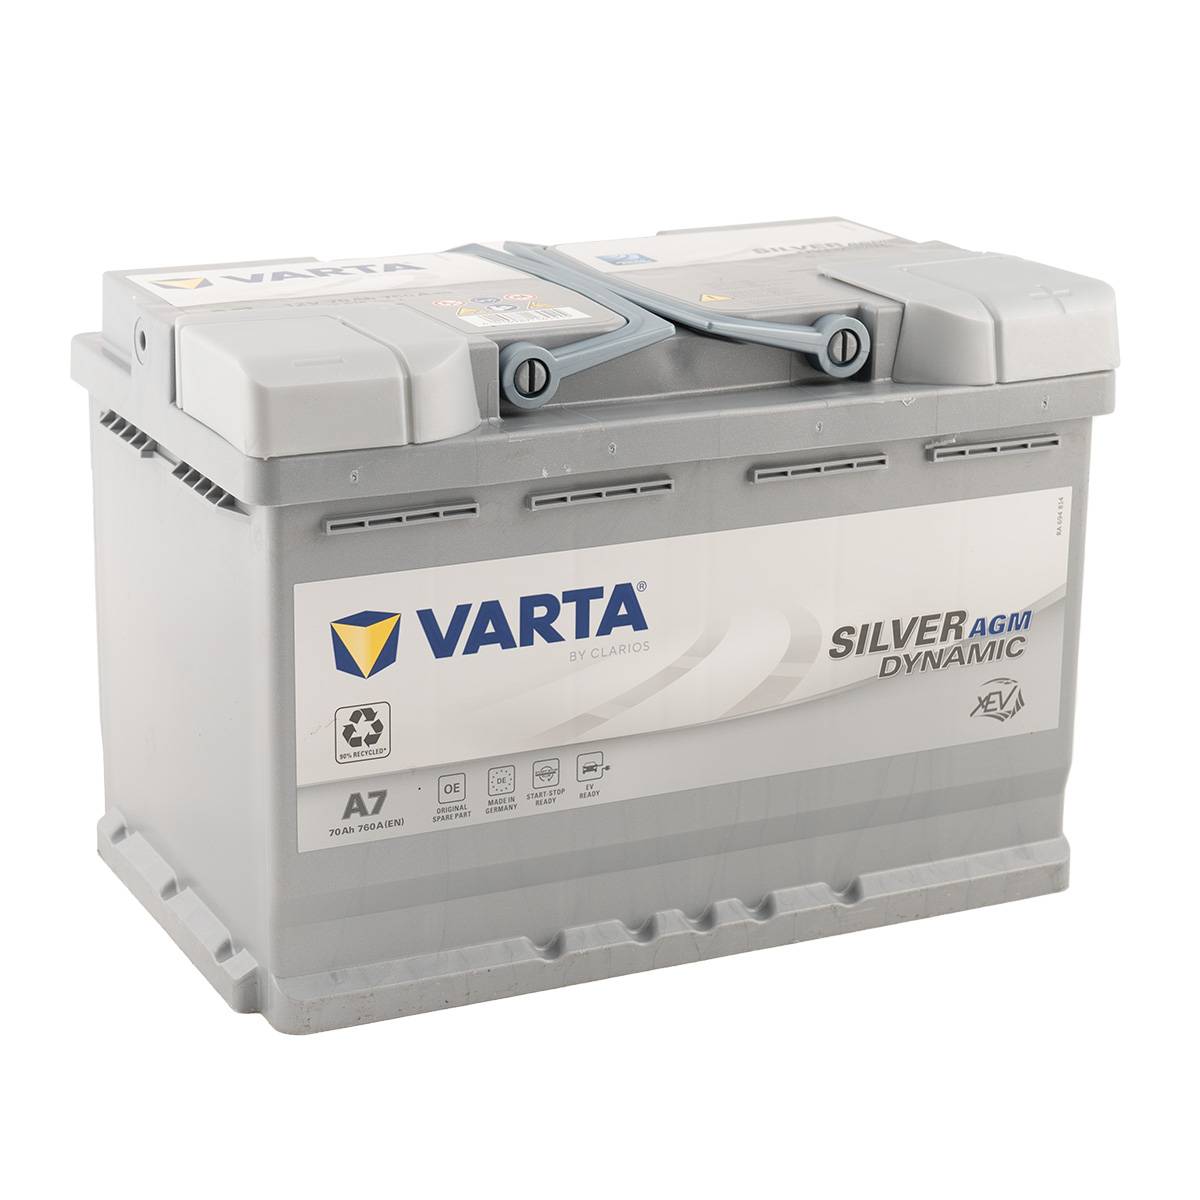 VARTA A7 Silver Dynamic AGM 12V 70Ah 760A Autobatterie Start-Stop 570 901  076, Starter batteries, Boots & Marine, Batteries by application